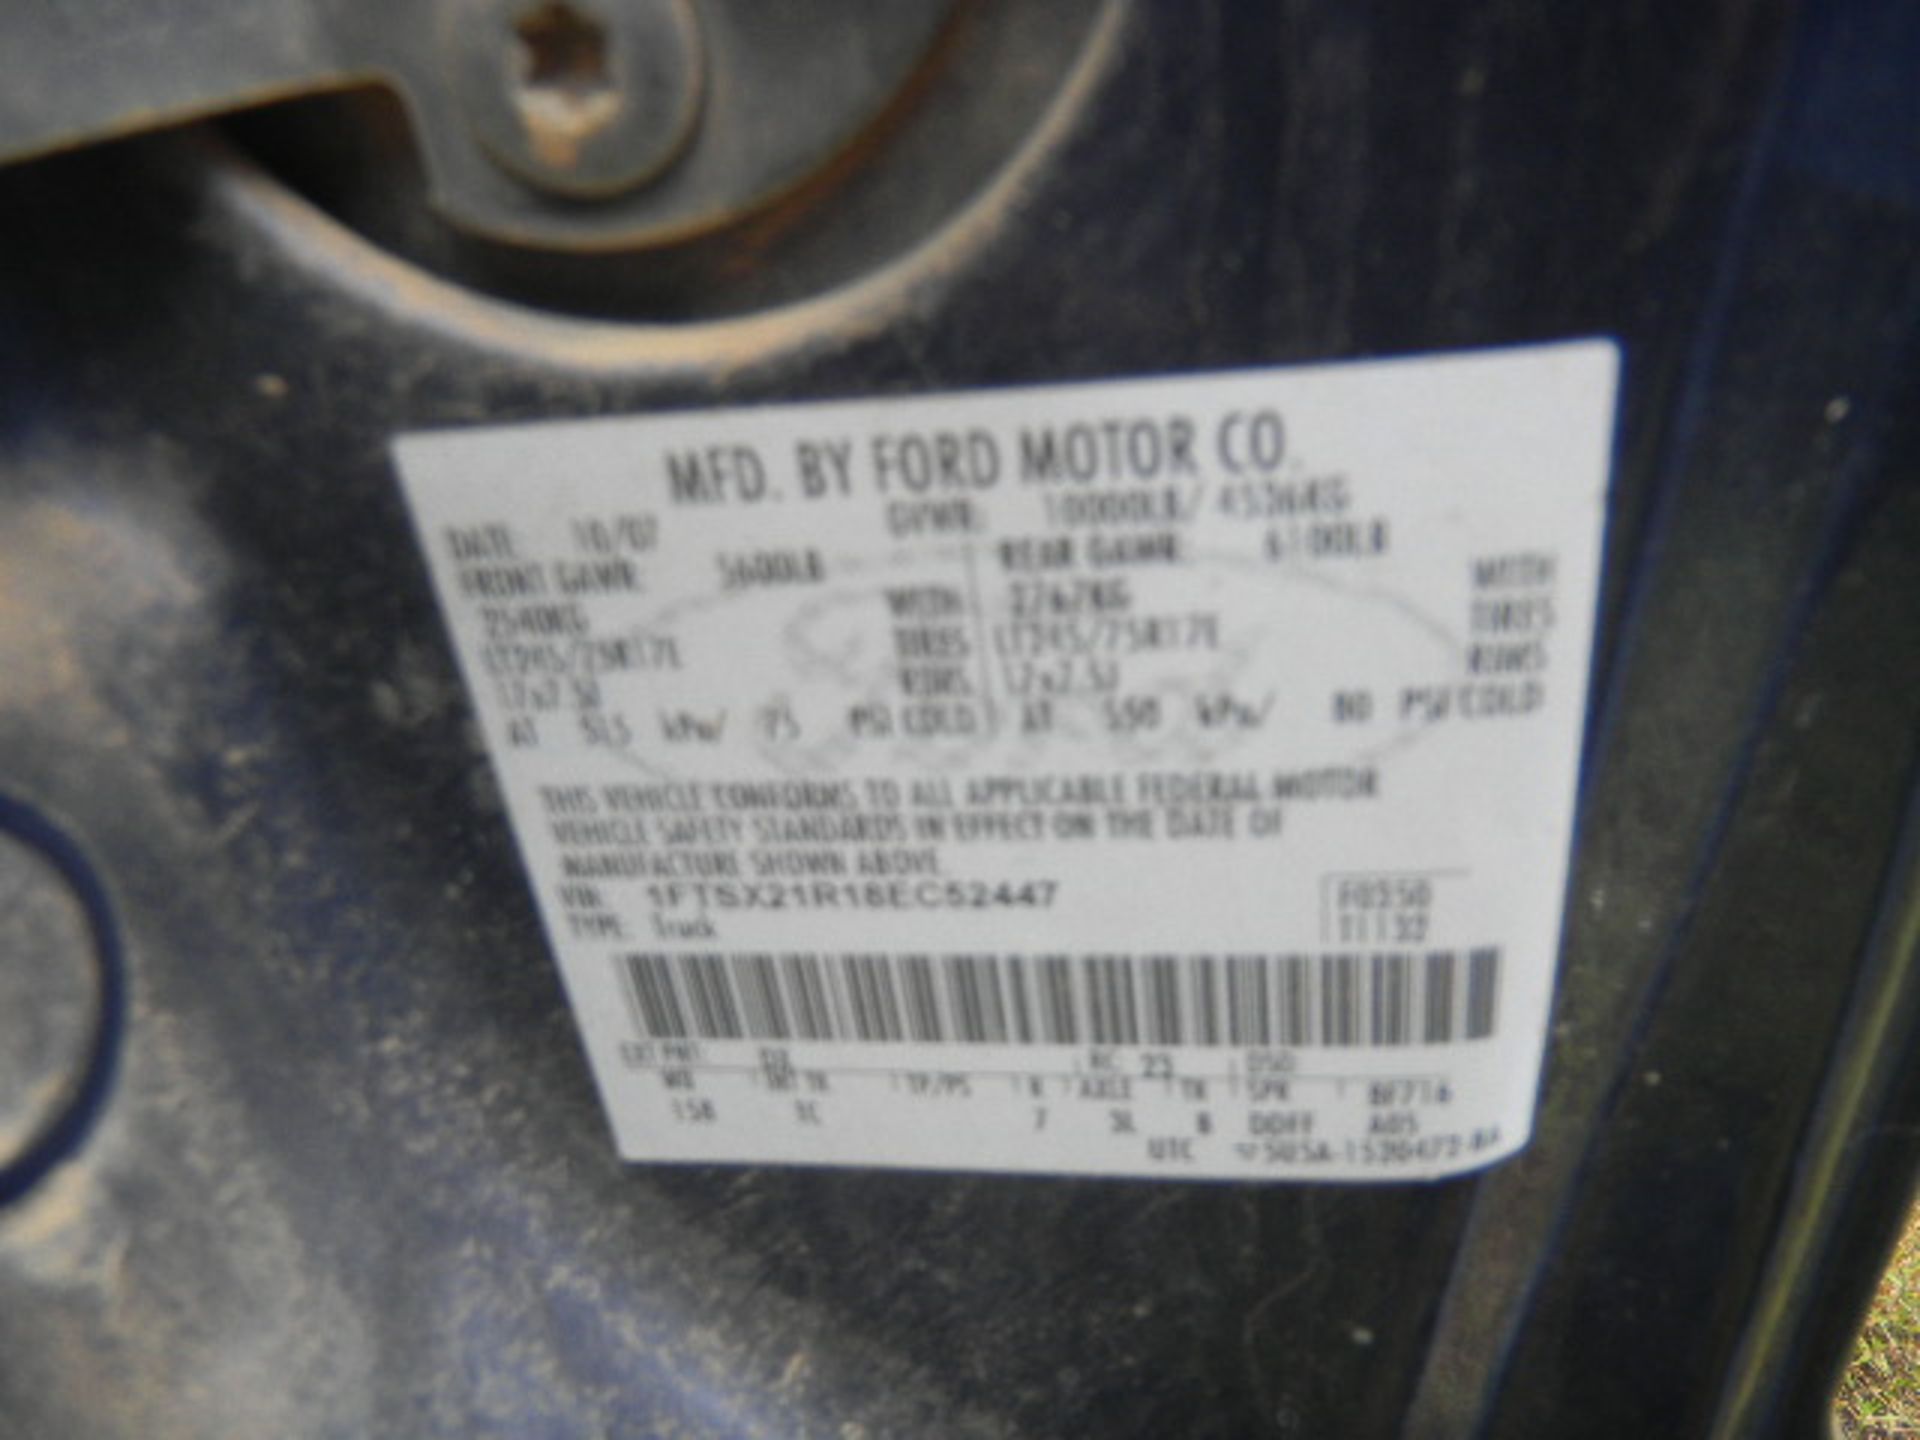 2008 Ford F250 Super Duty 4x4 Pickup - Asset I.D. #860 - Last of Vin (EC52447) - Image 10 of 10